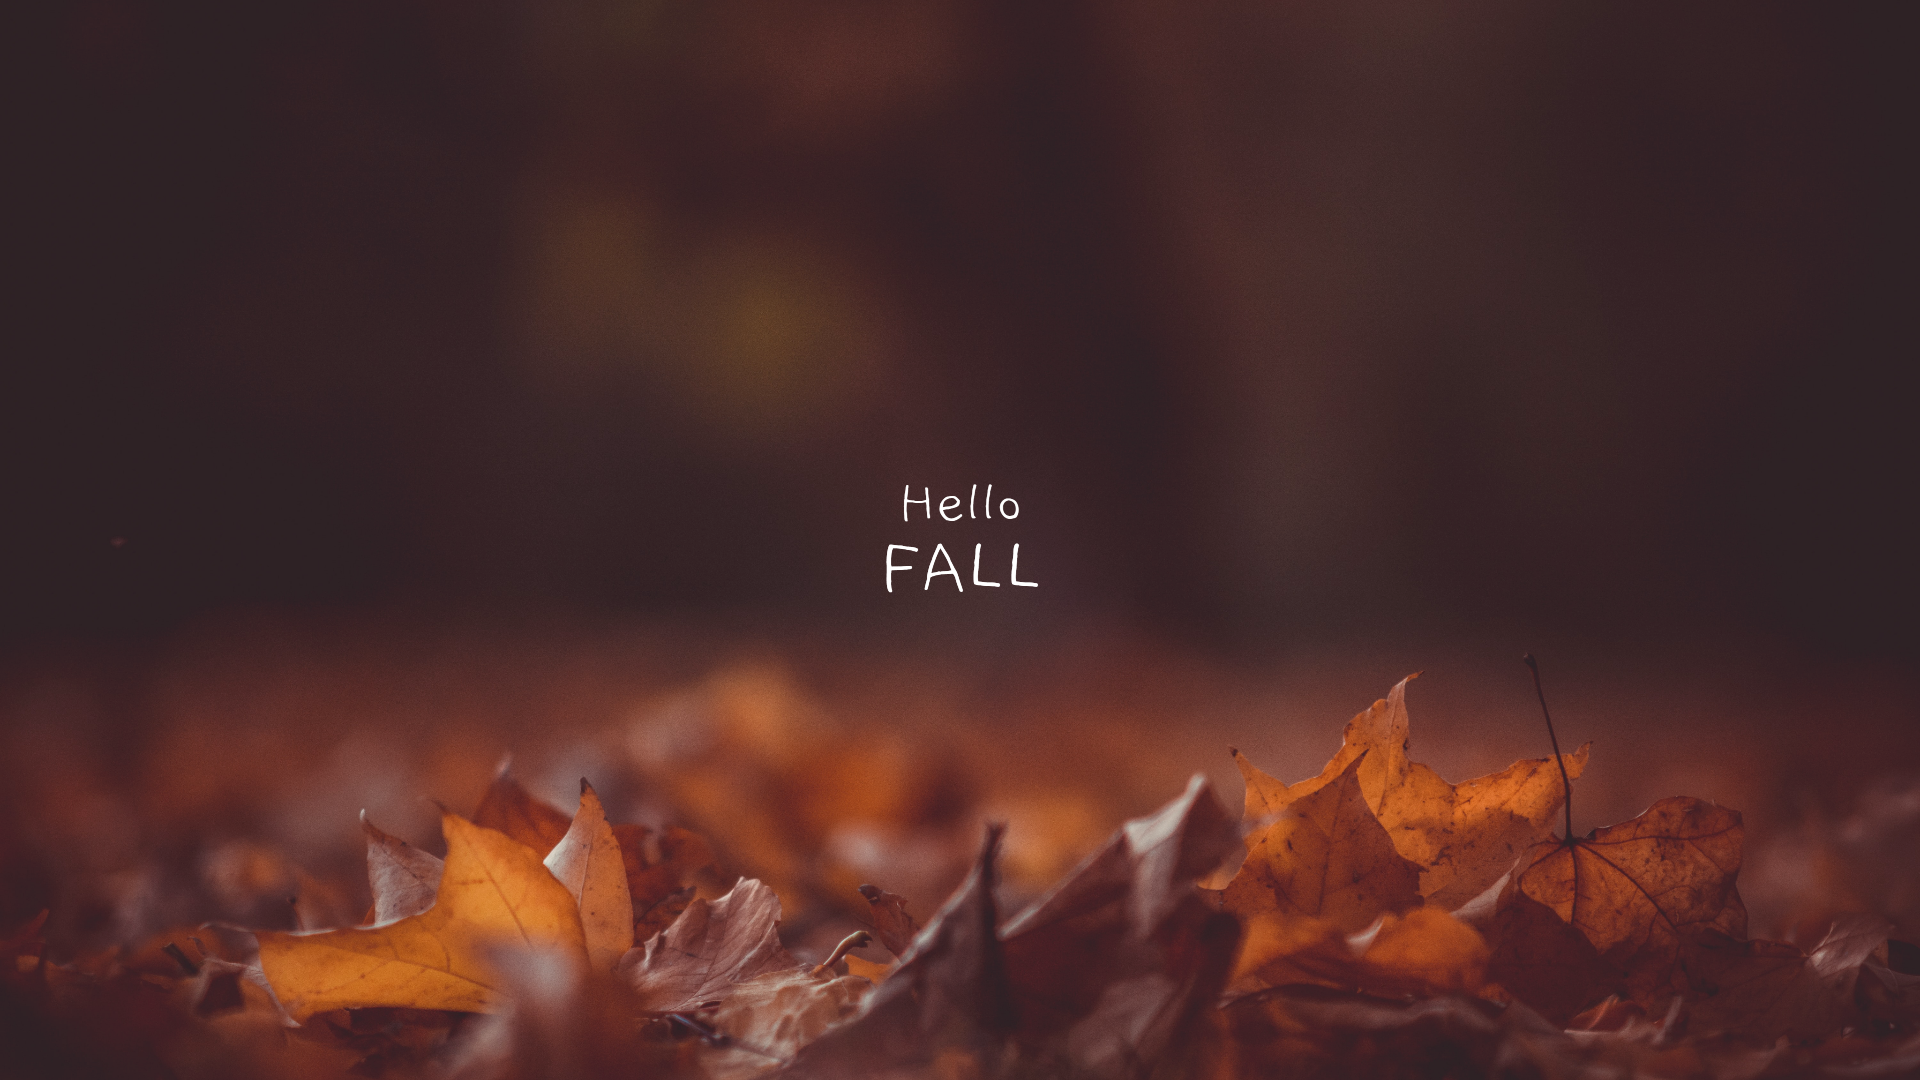 fall season quotes and sayings